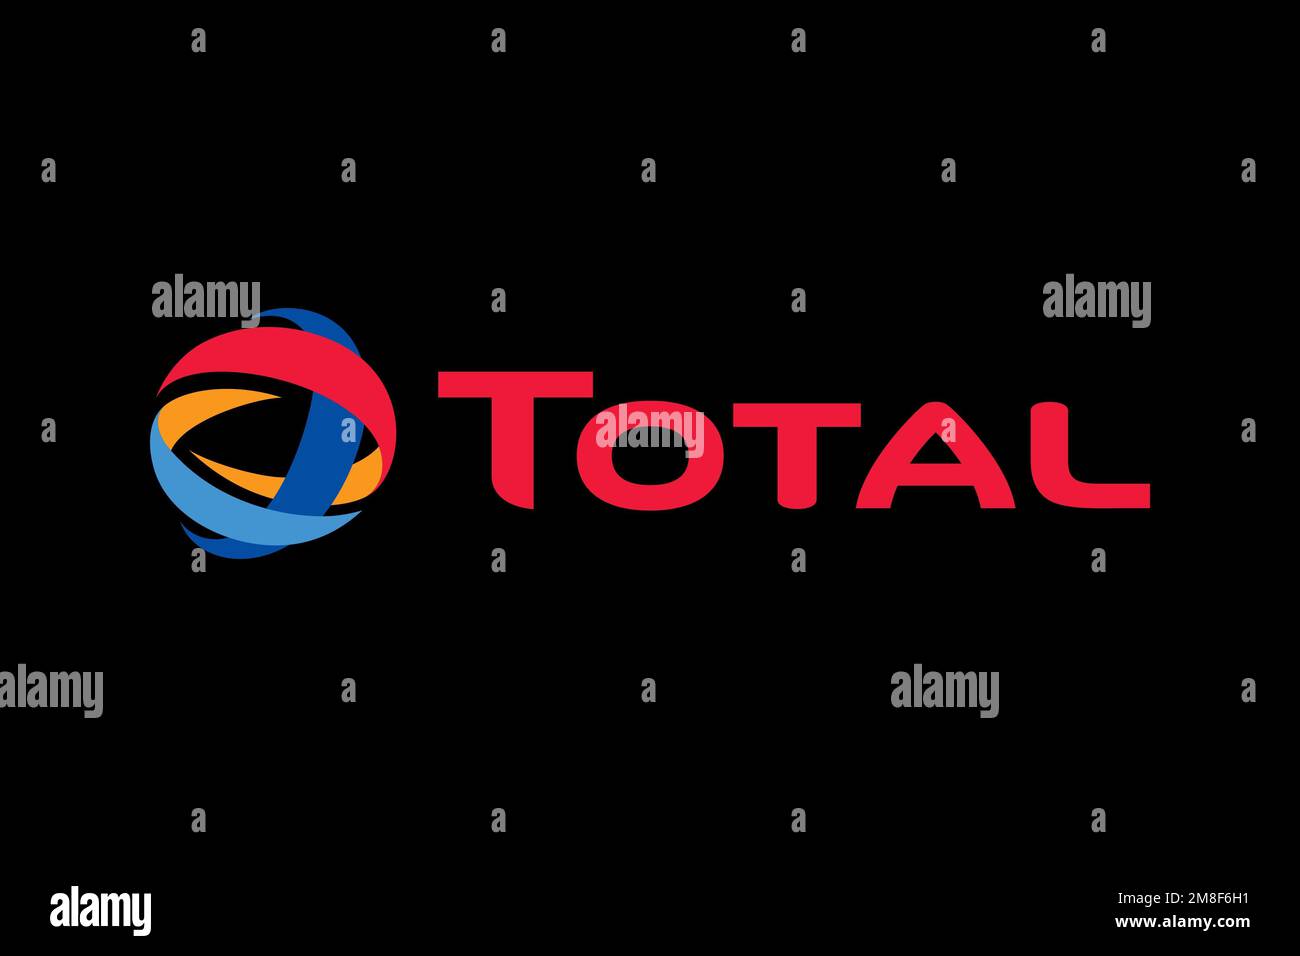 total logo font